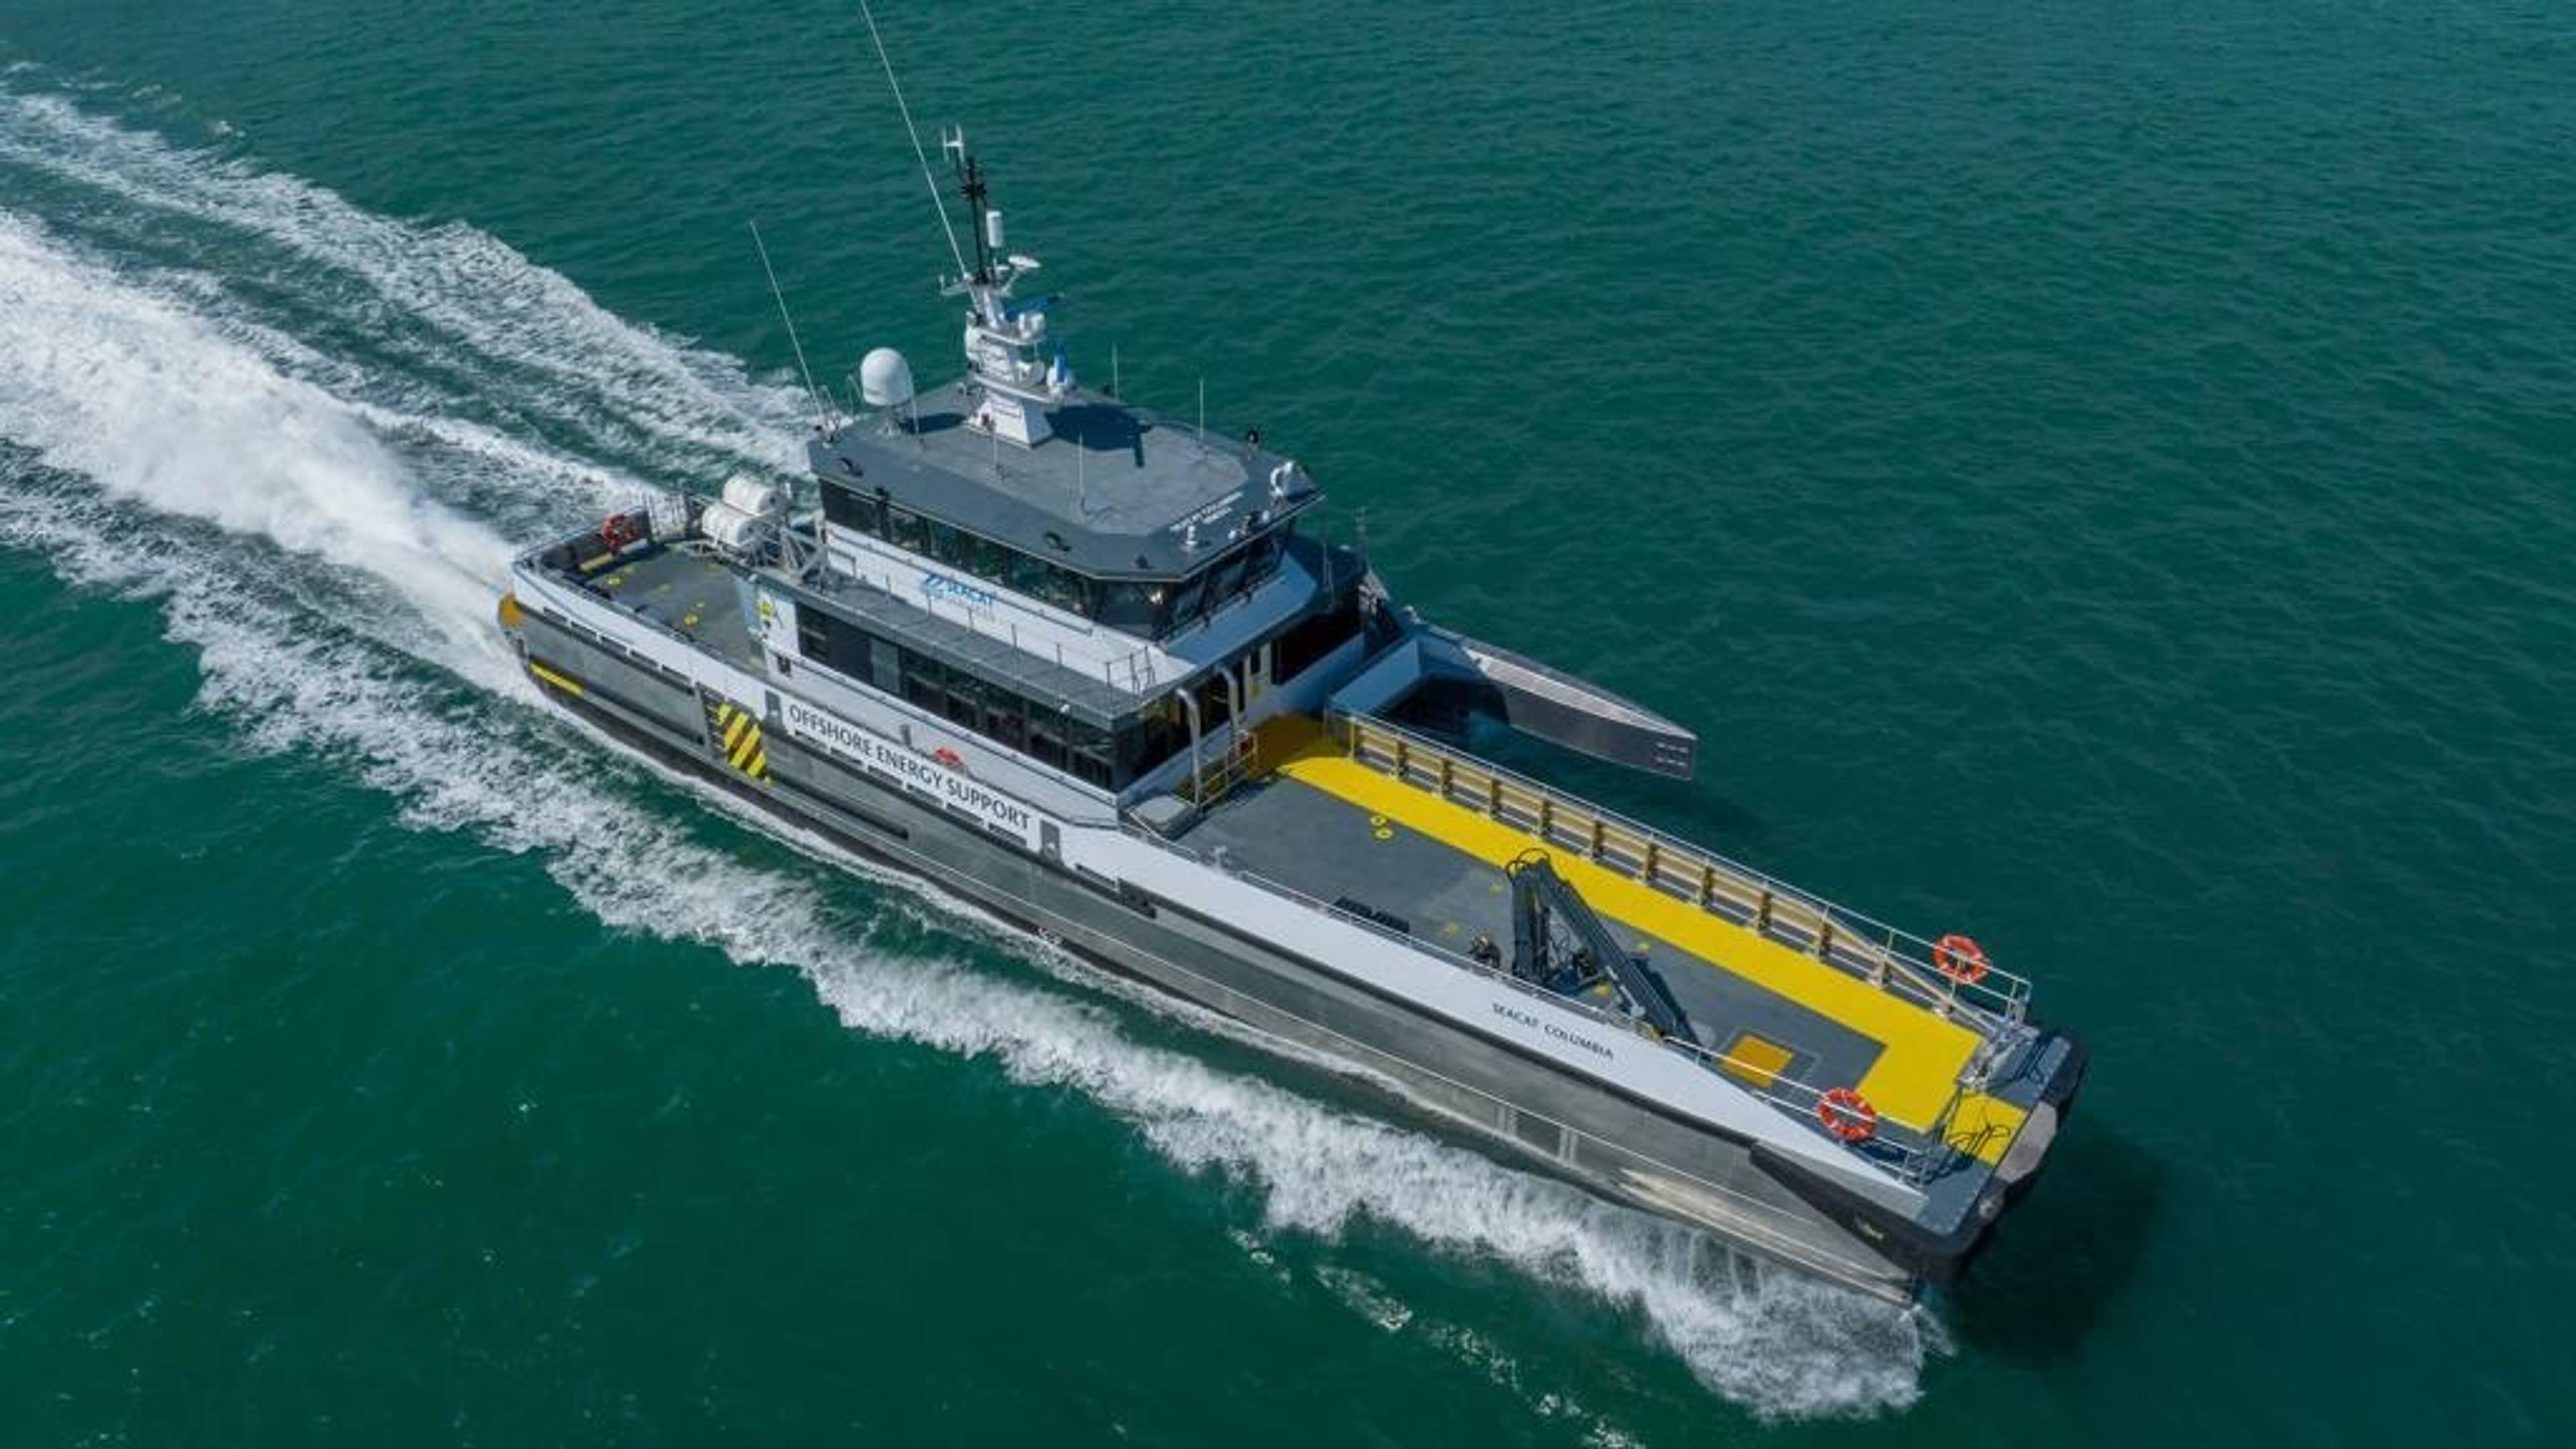 Seacat Columbia crew transfer vessel